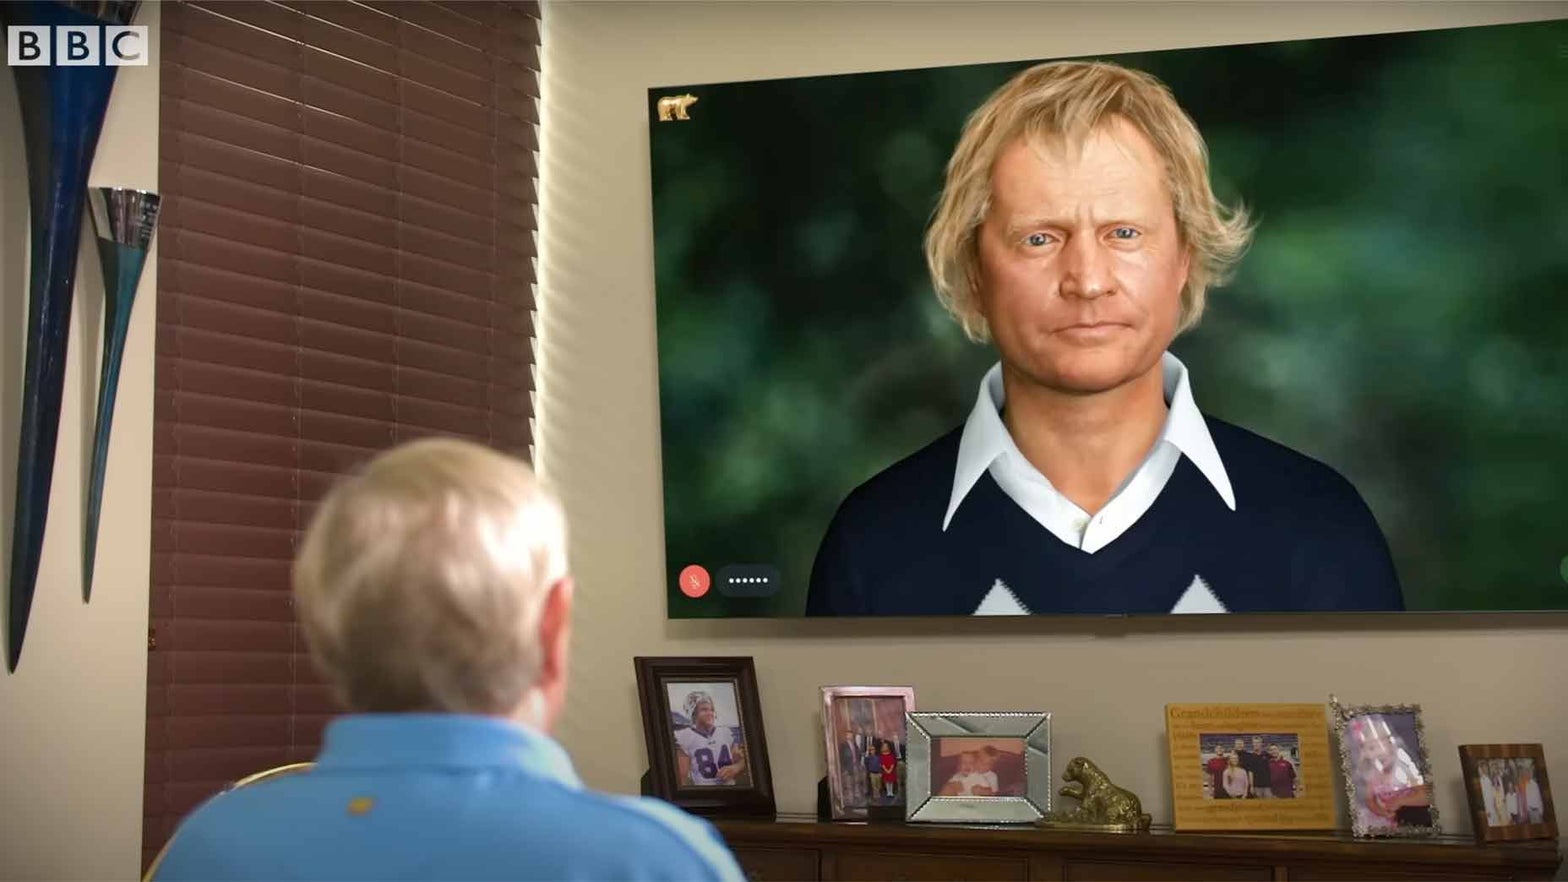 Meet Digital Jack Nicklaus, the golf legend’s metaverse ‘twin’